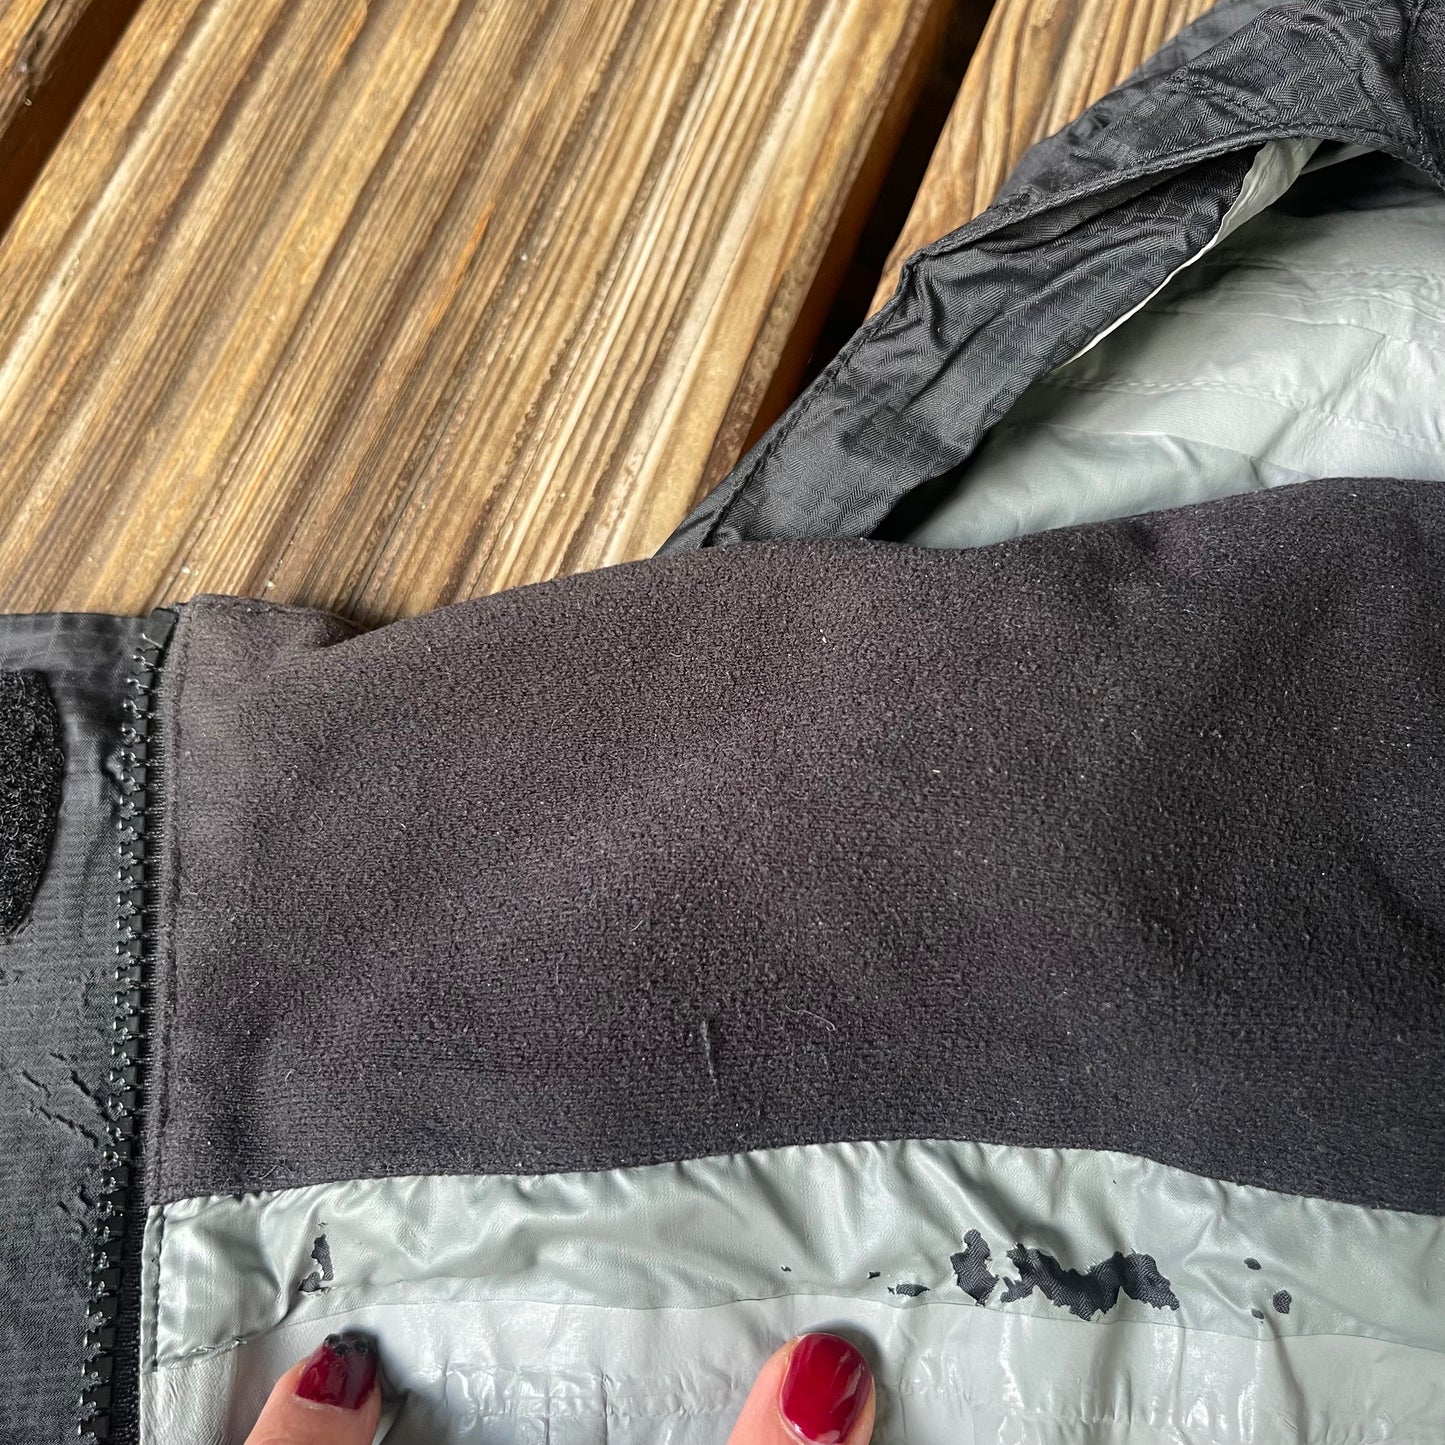 Regen- Jacke von Mammut (S Damen) Dry-Tech schwarz